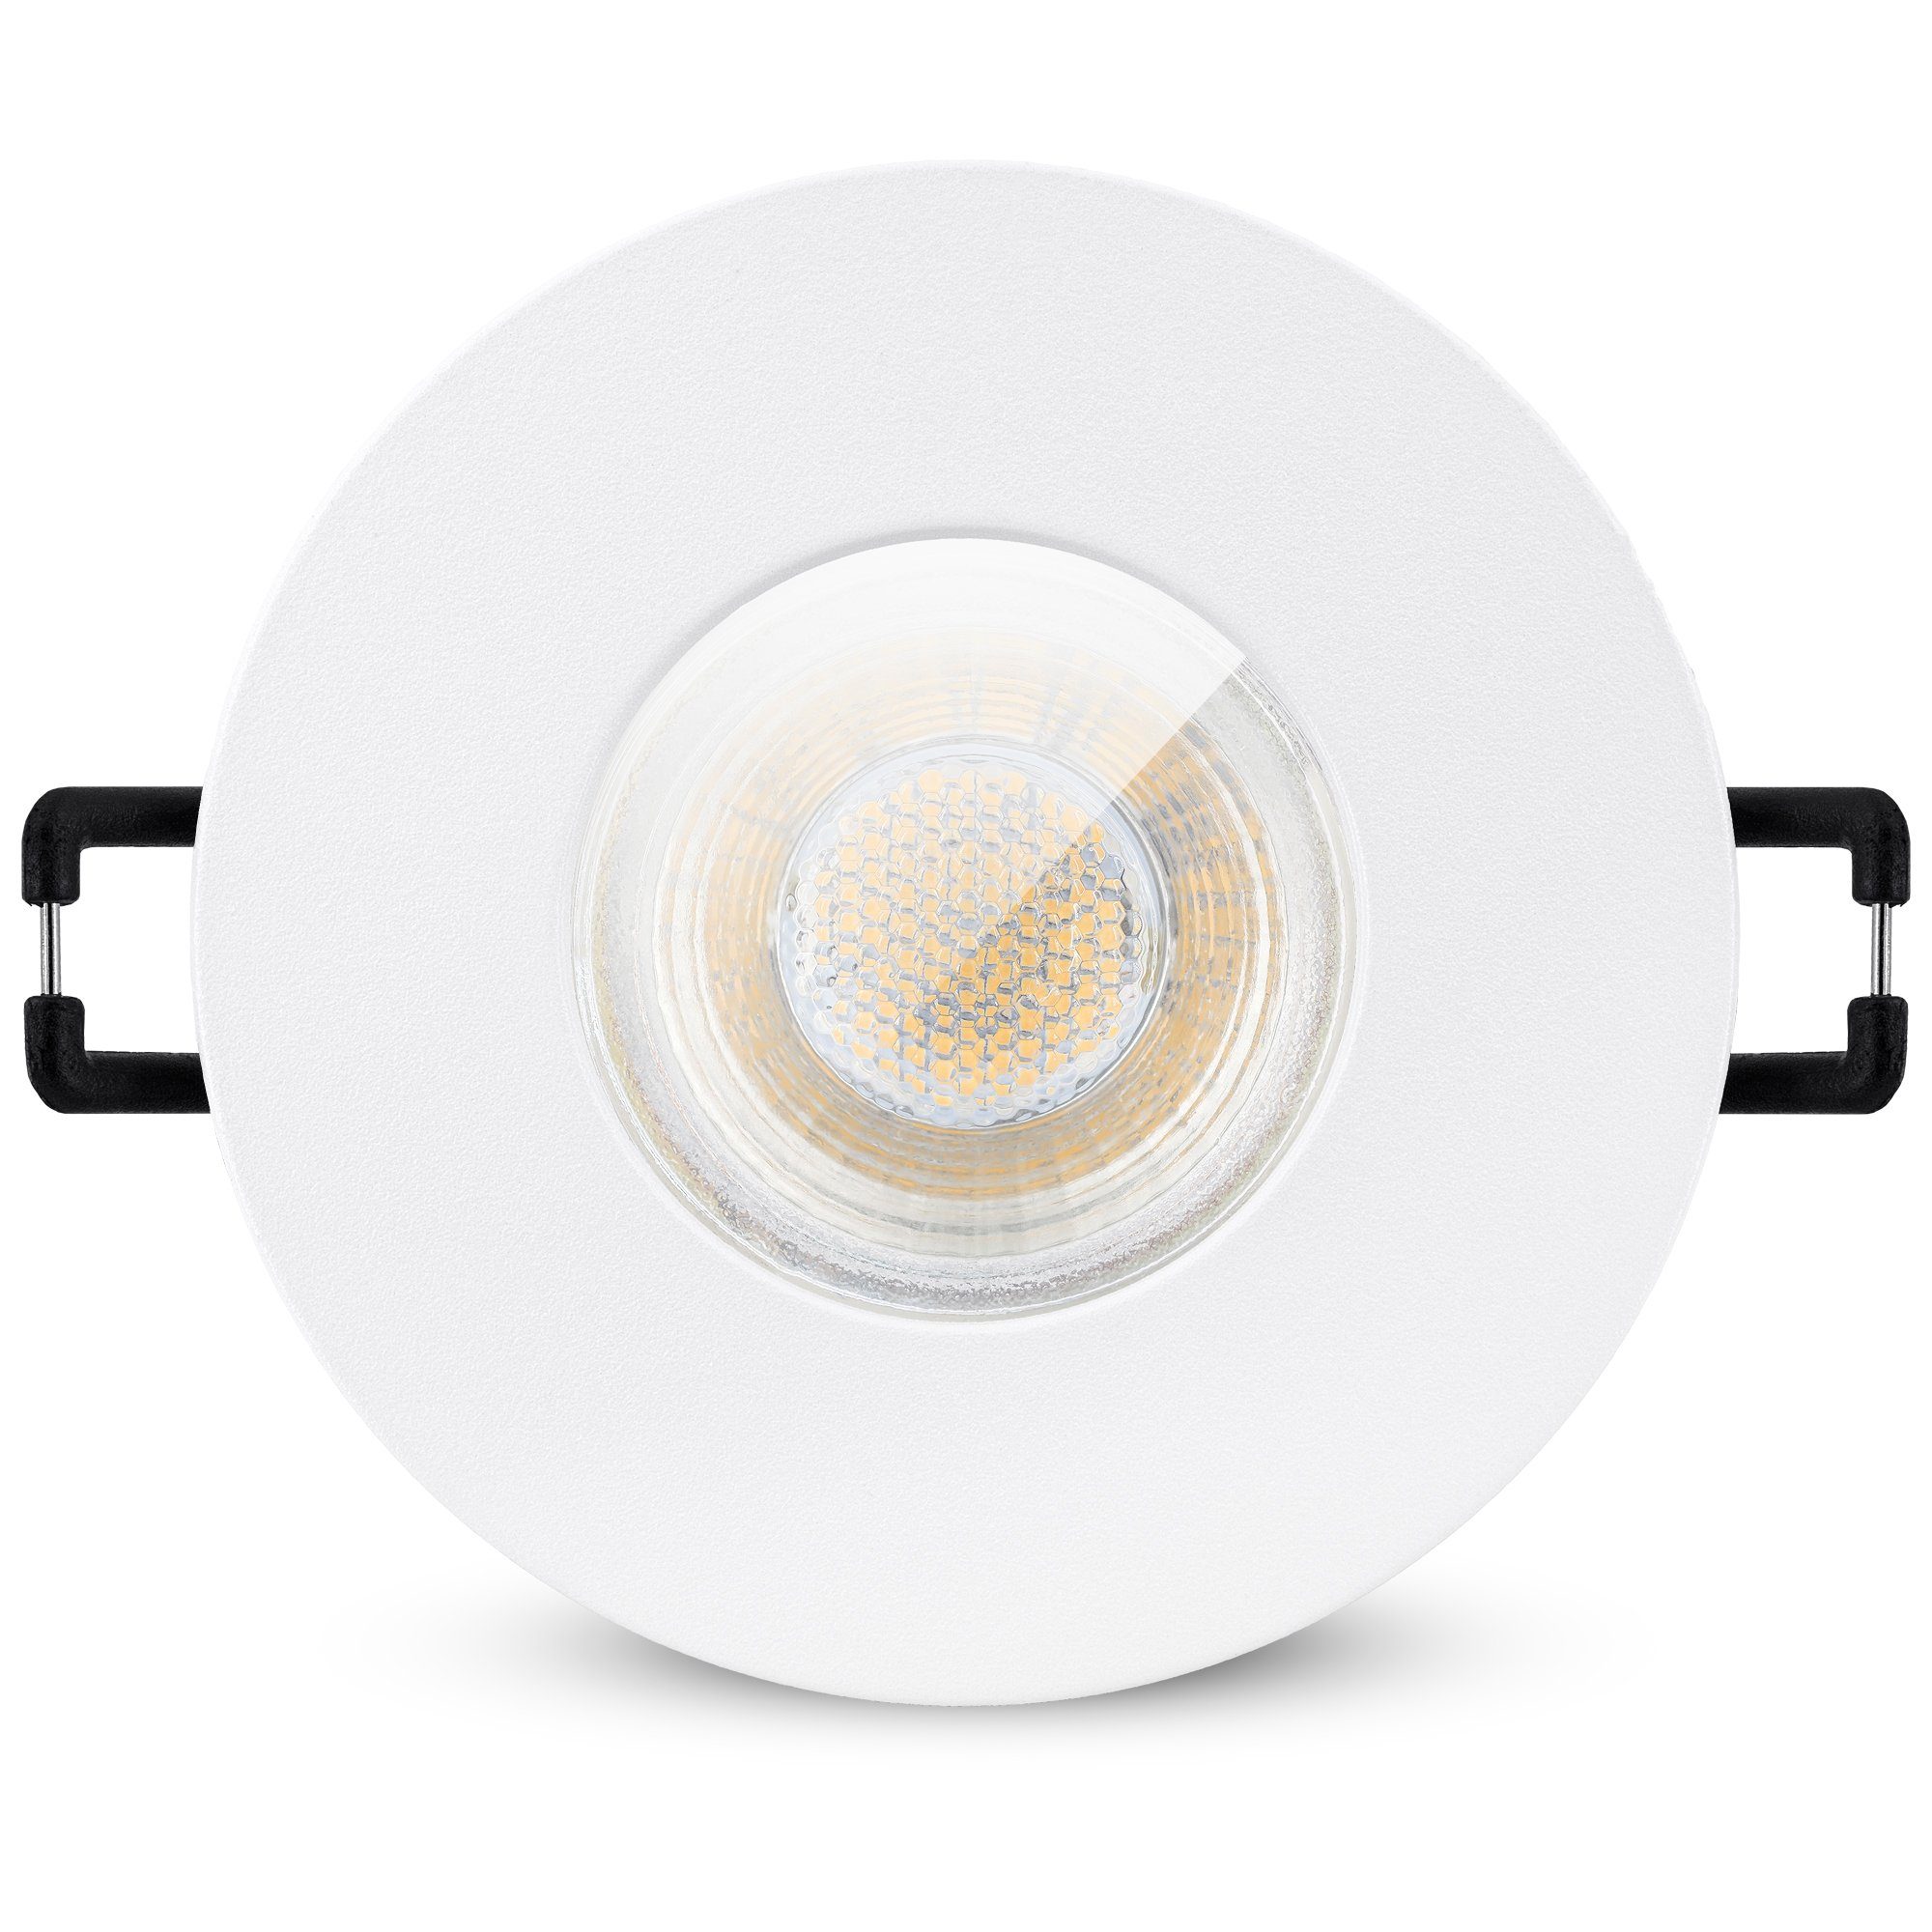 linovum LED Einbaustrahler LED Bad Einbauleuchte IP65 matt weiss GU10 6W neutralweiss 230V, Leuchtmittel inklusive, Leuchtmittel inklusive